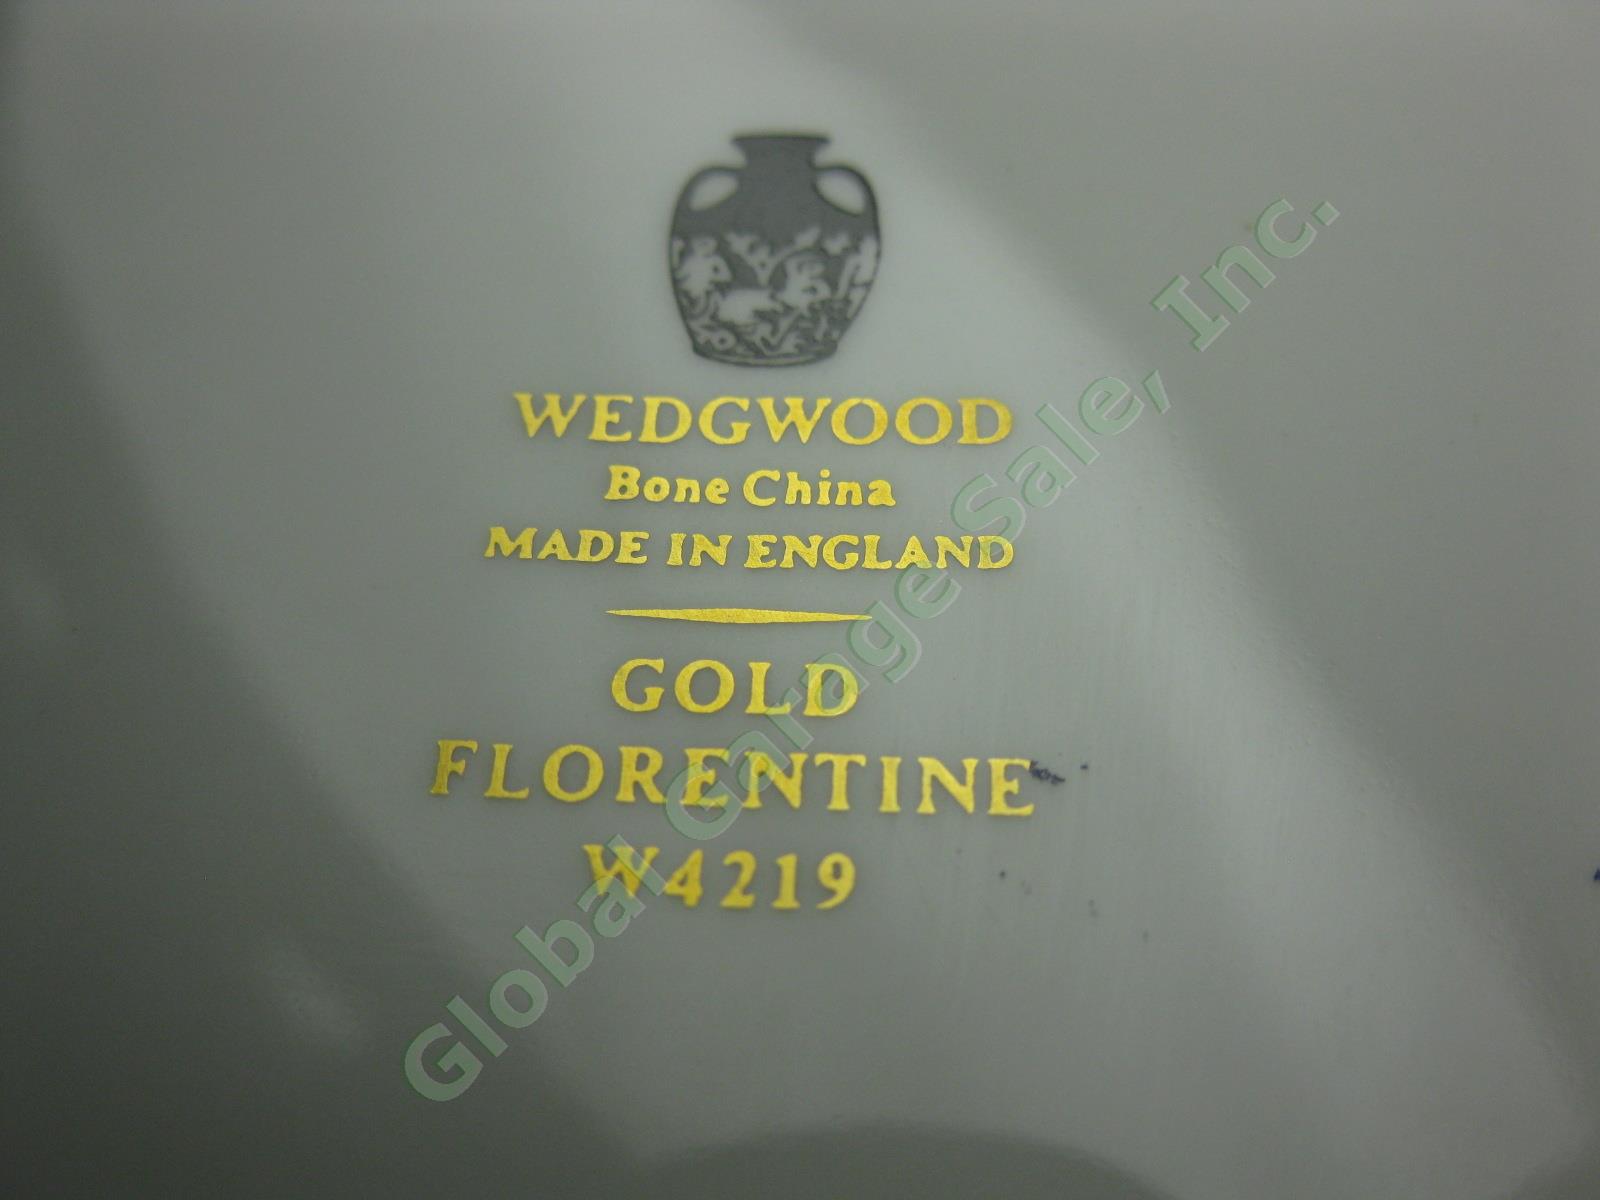 Wedgwood Gold Florentine Dragon Bone China Large 9-1/2" Salad Serving Bowl W4219 5